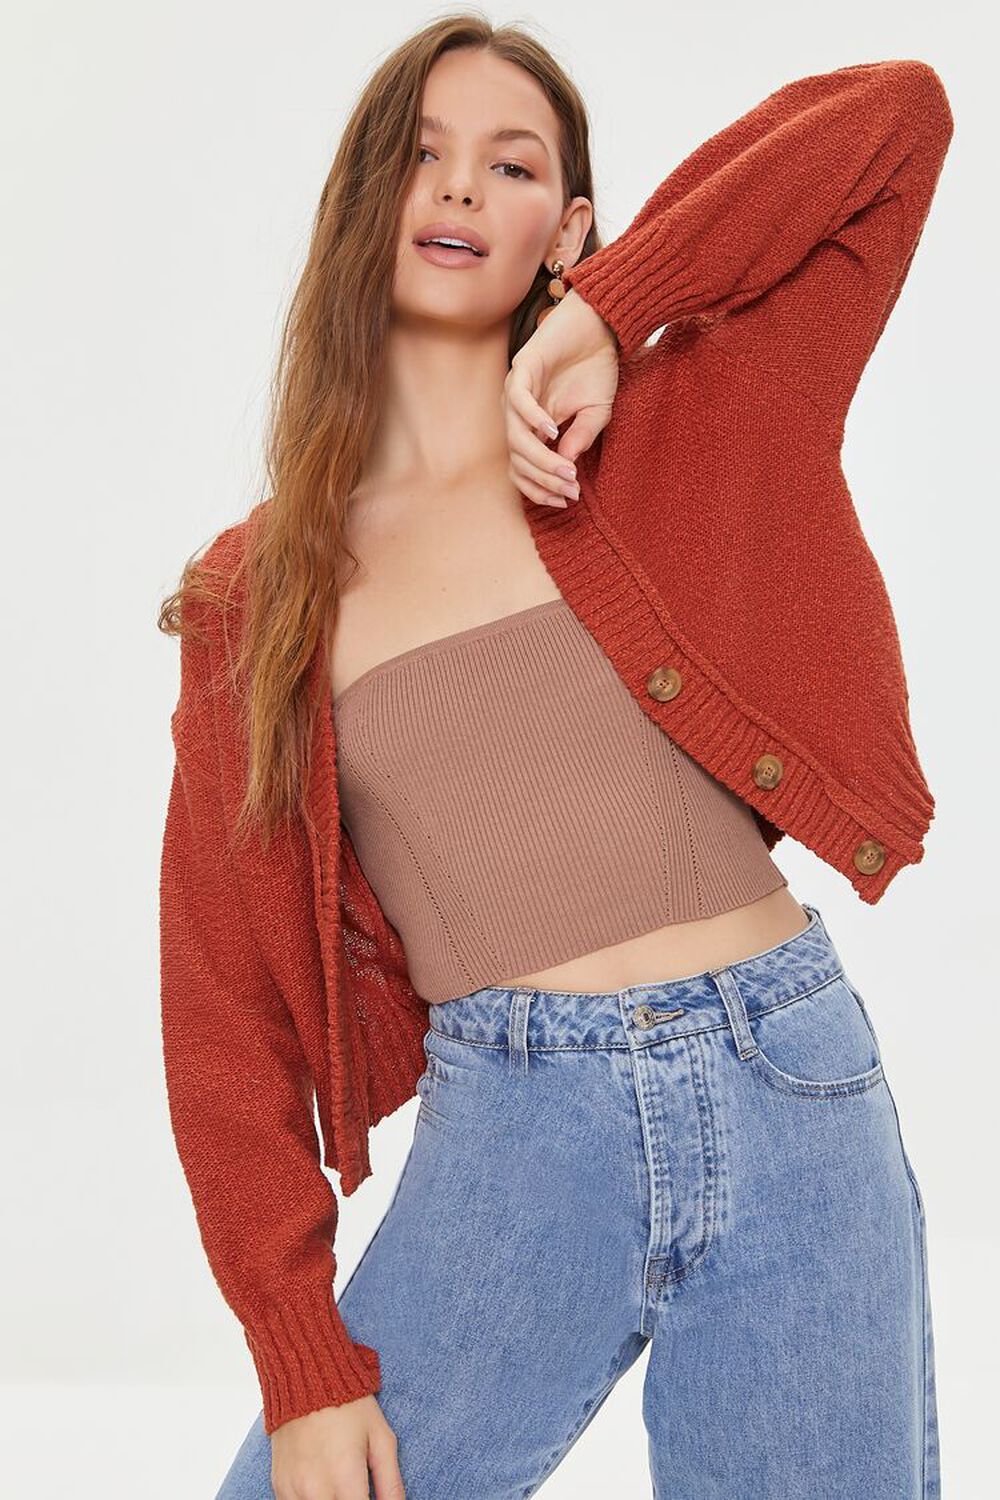 AUBURN Boucle Knit Cardigan Sweater, image 1